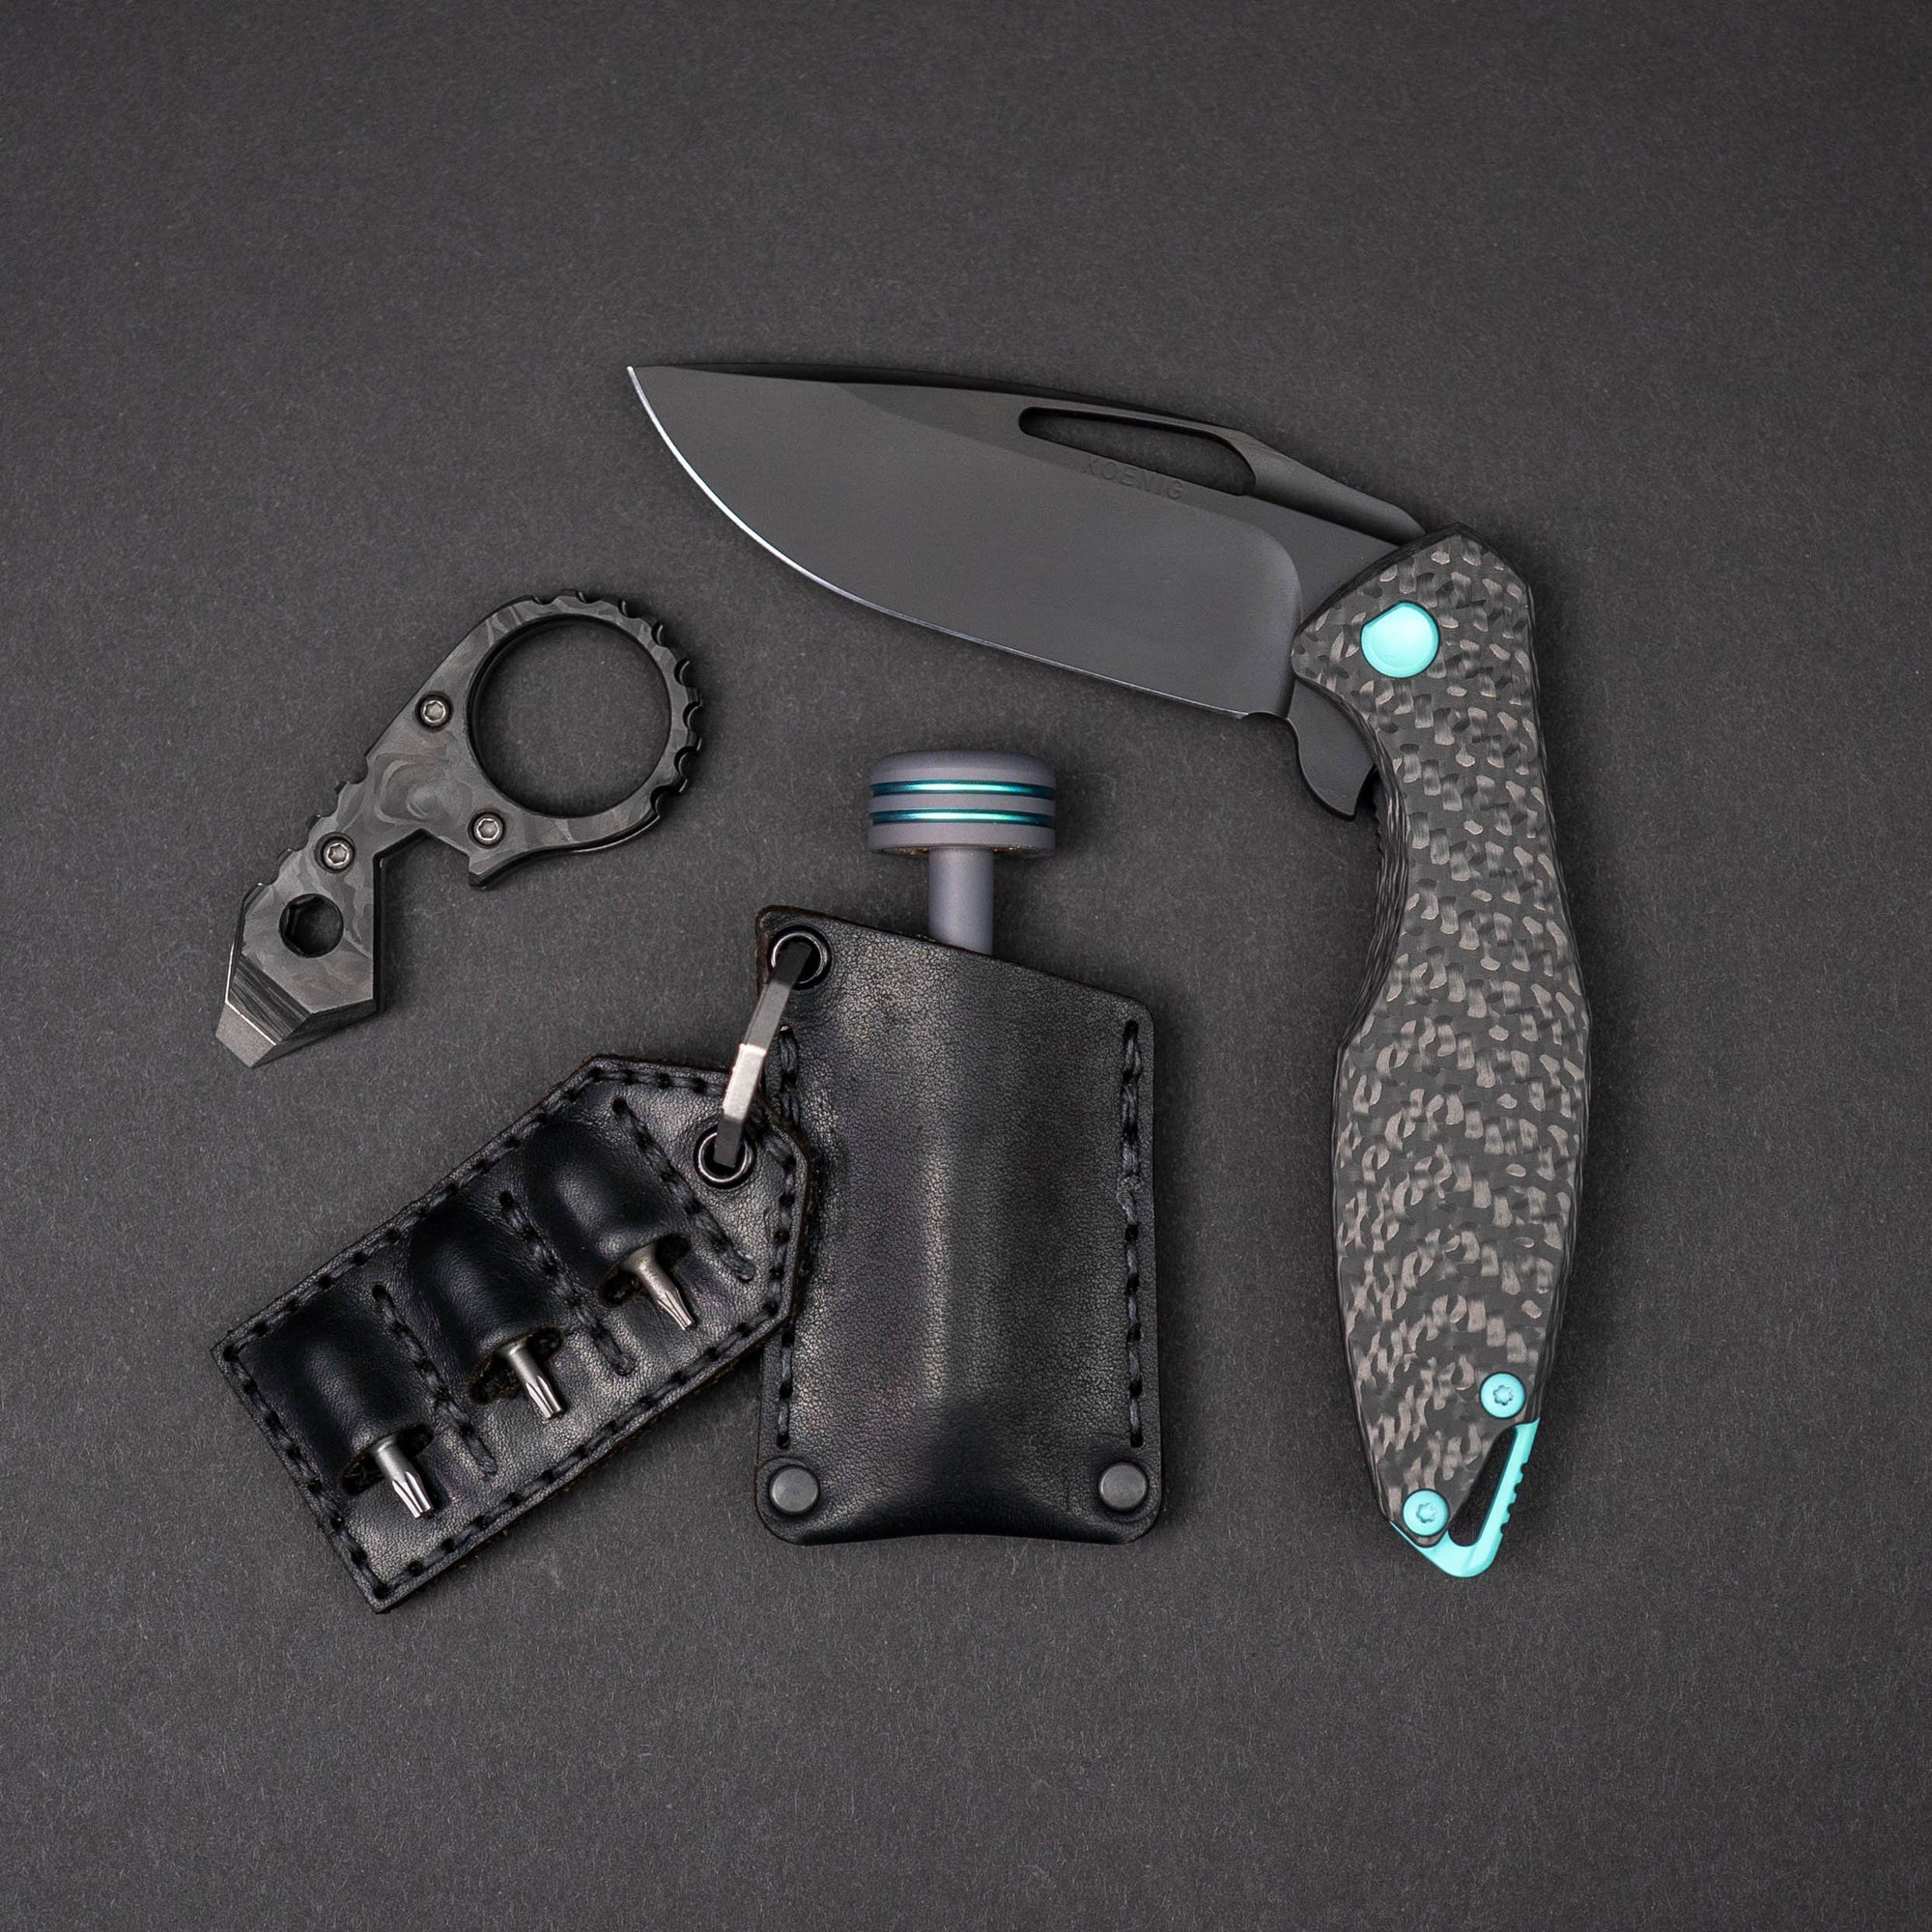 El Rey Blue Kingman Turquoise Obsidian Bronze Knife w Black DLC